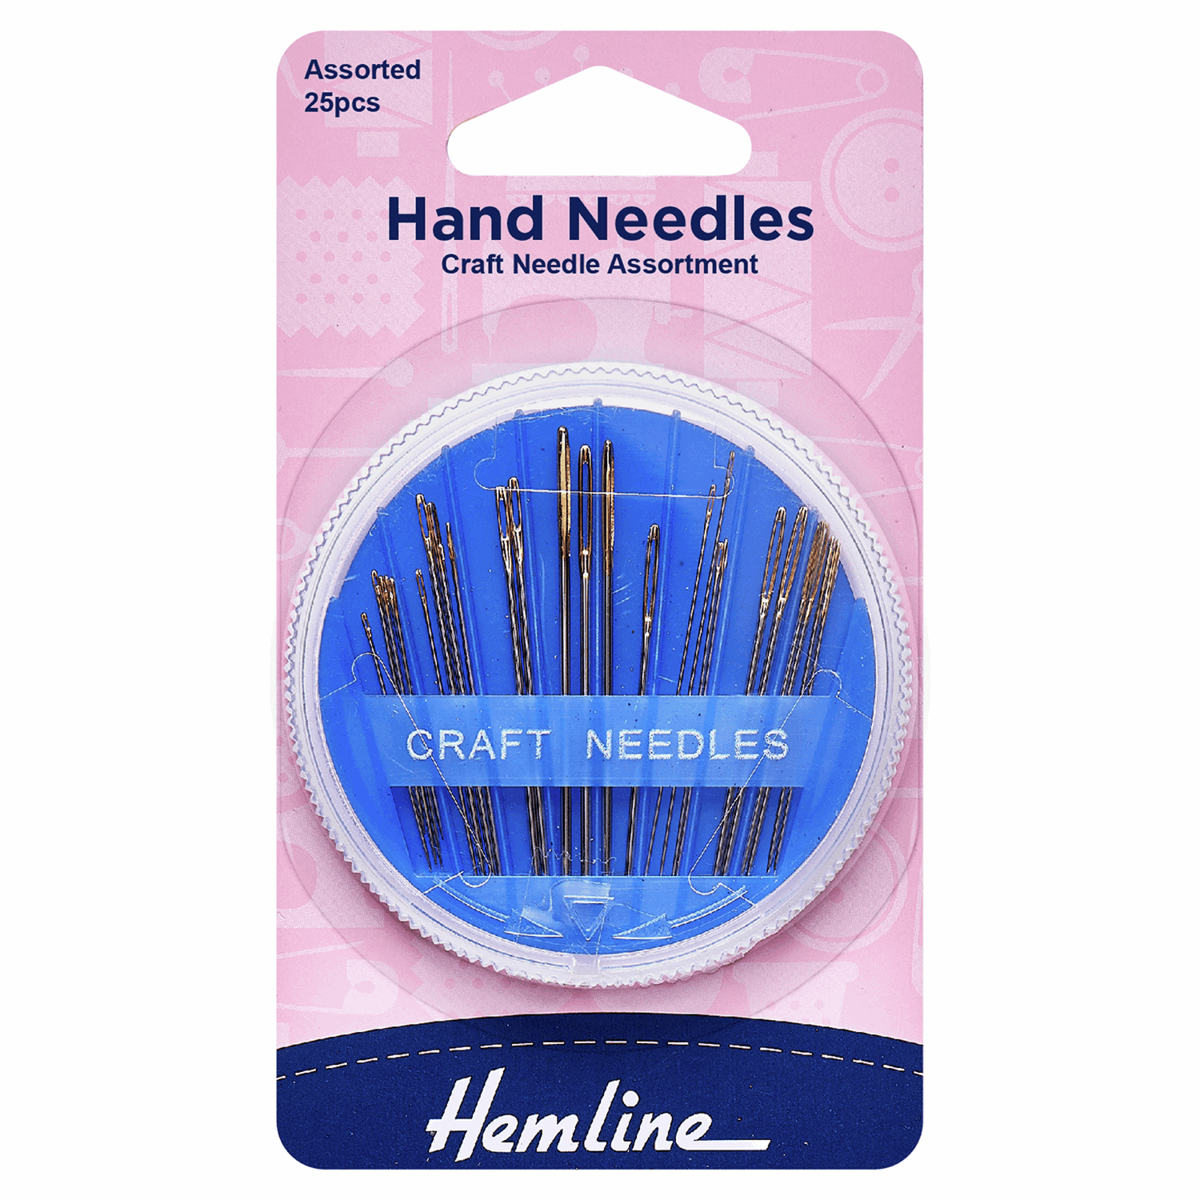 Hemline Hand Sewing Needles: Craft Assortment Compact